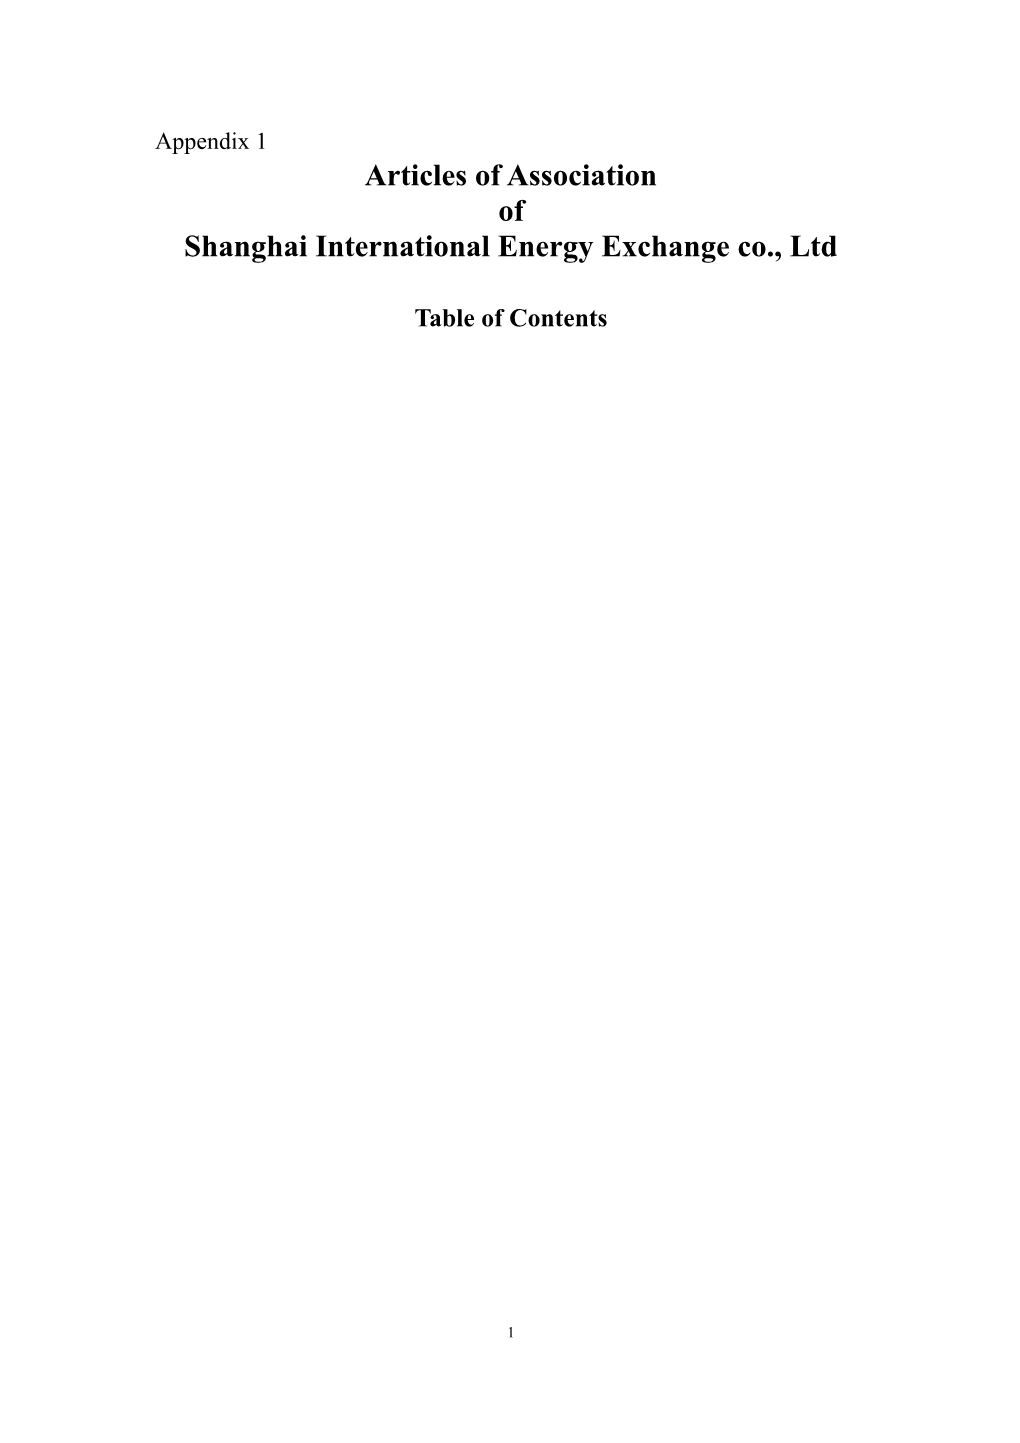 Shanghai International Energy Exchange Co., Ltd